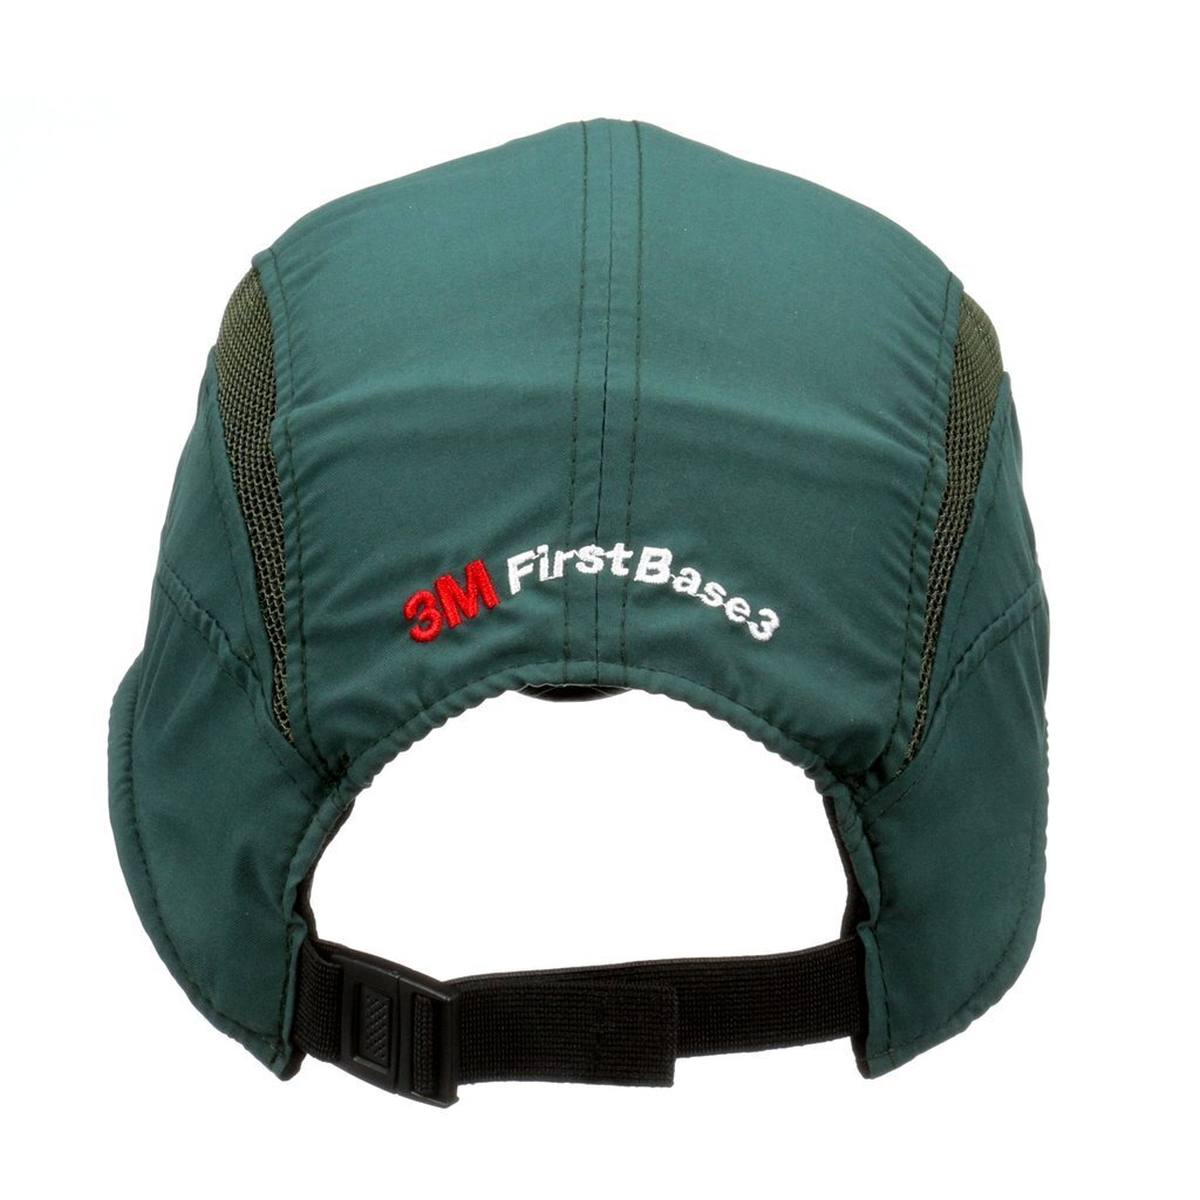 3M Scott First Base 3 Classic - bump cap in dark green - shortened peak 55 mm, EN812